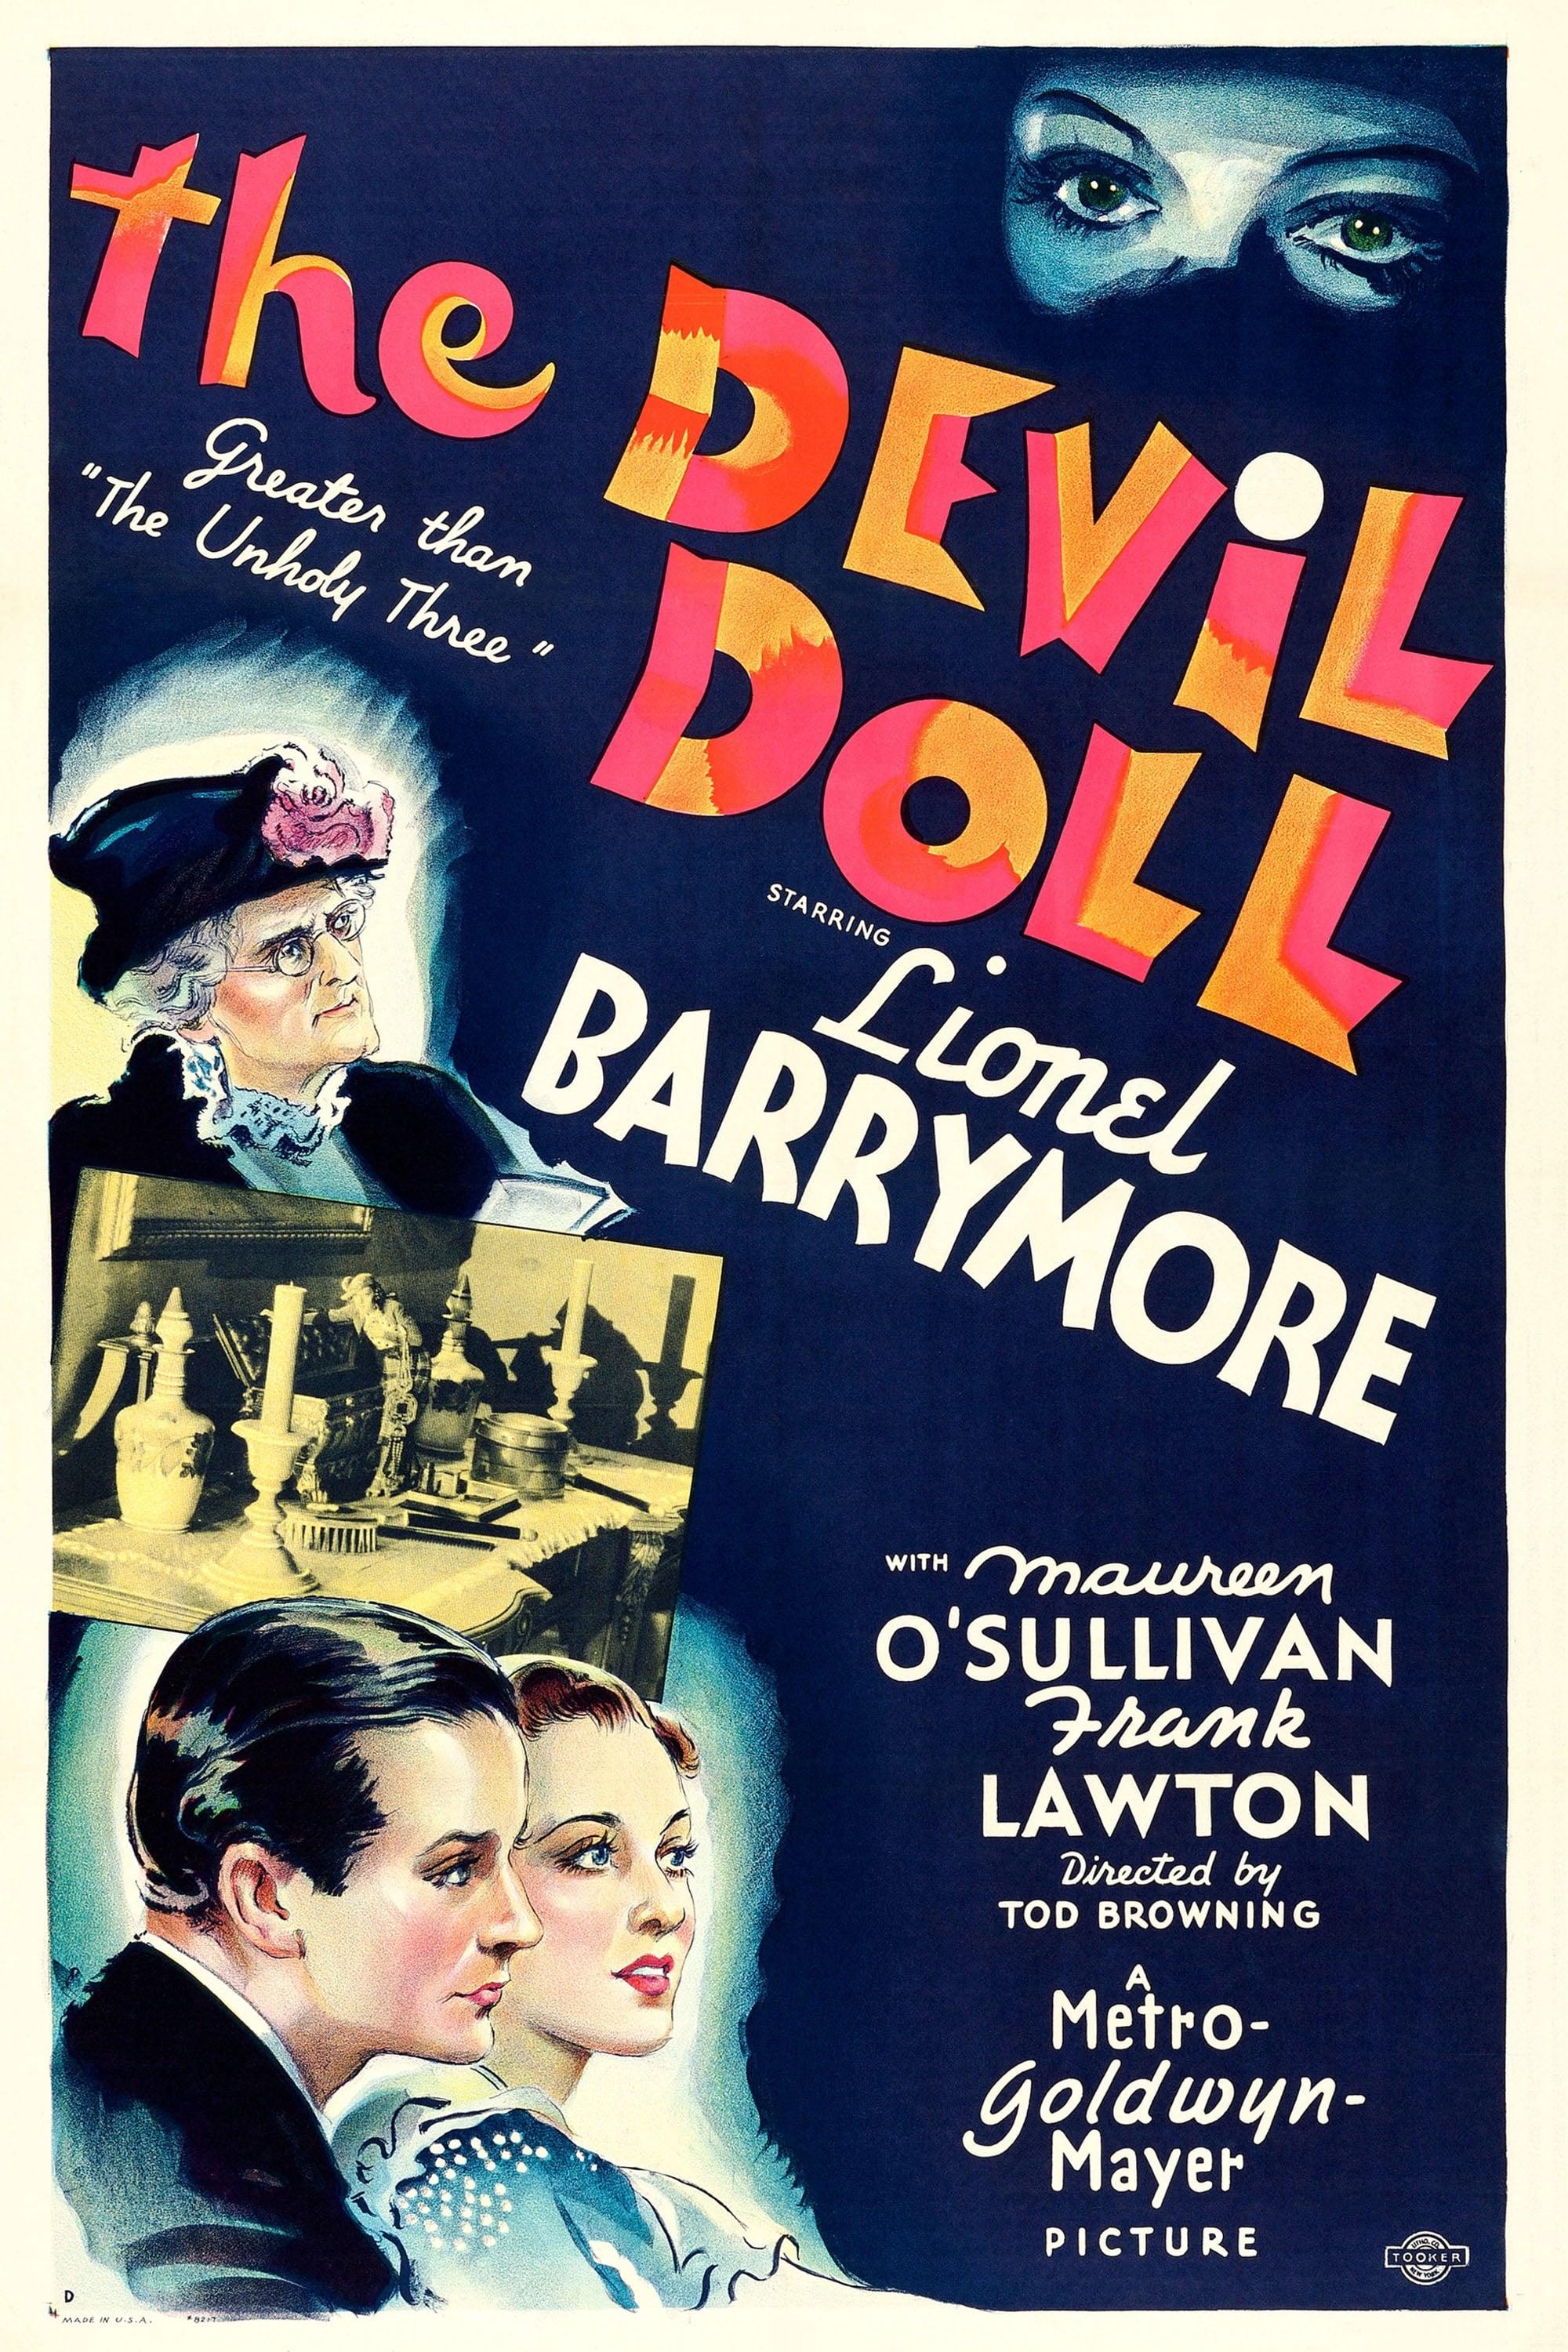 The Devil-Doll poster